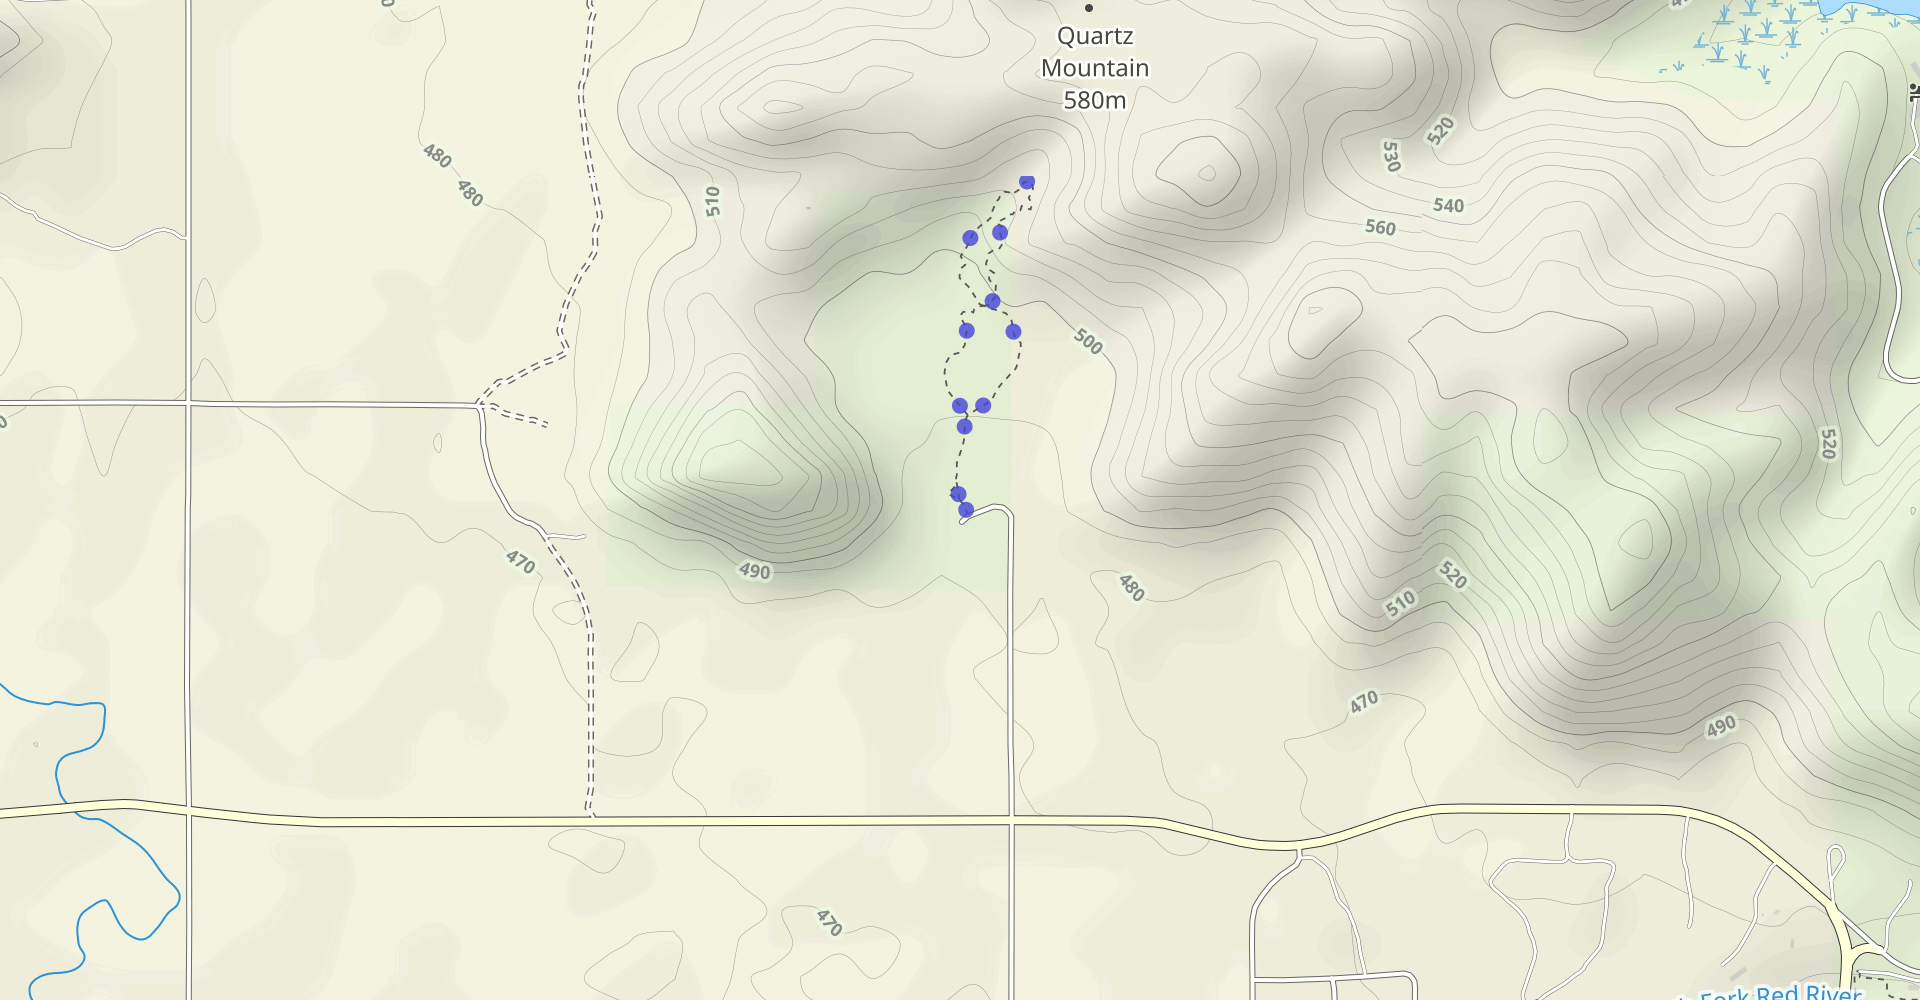 Quartz Mountain Trail